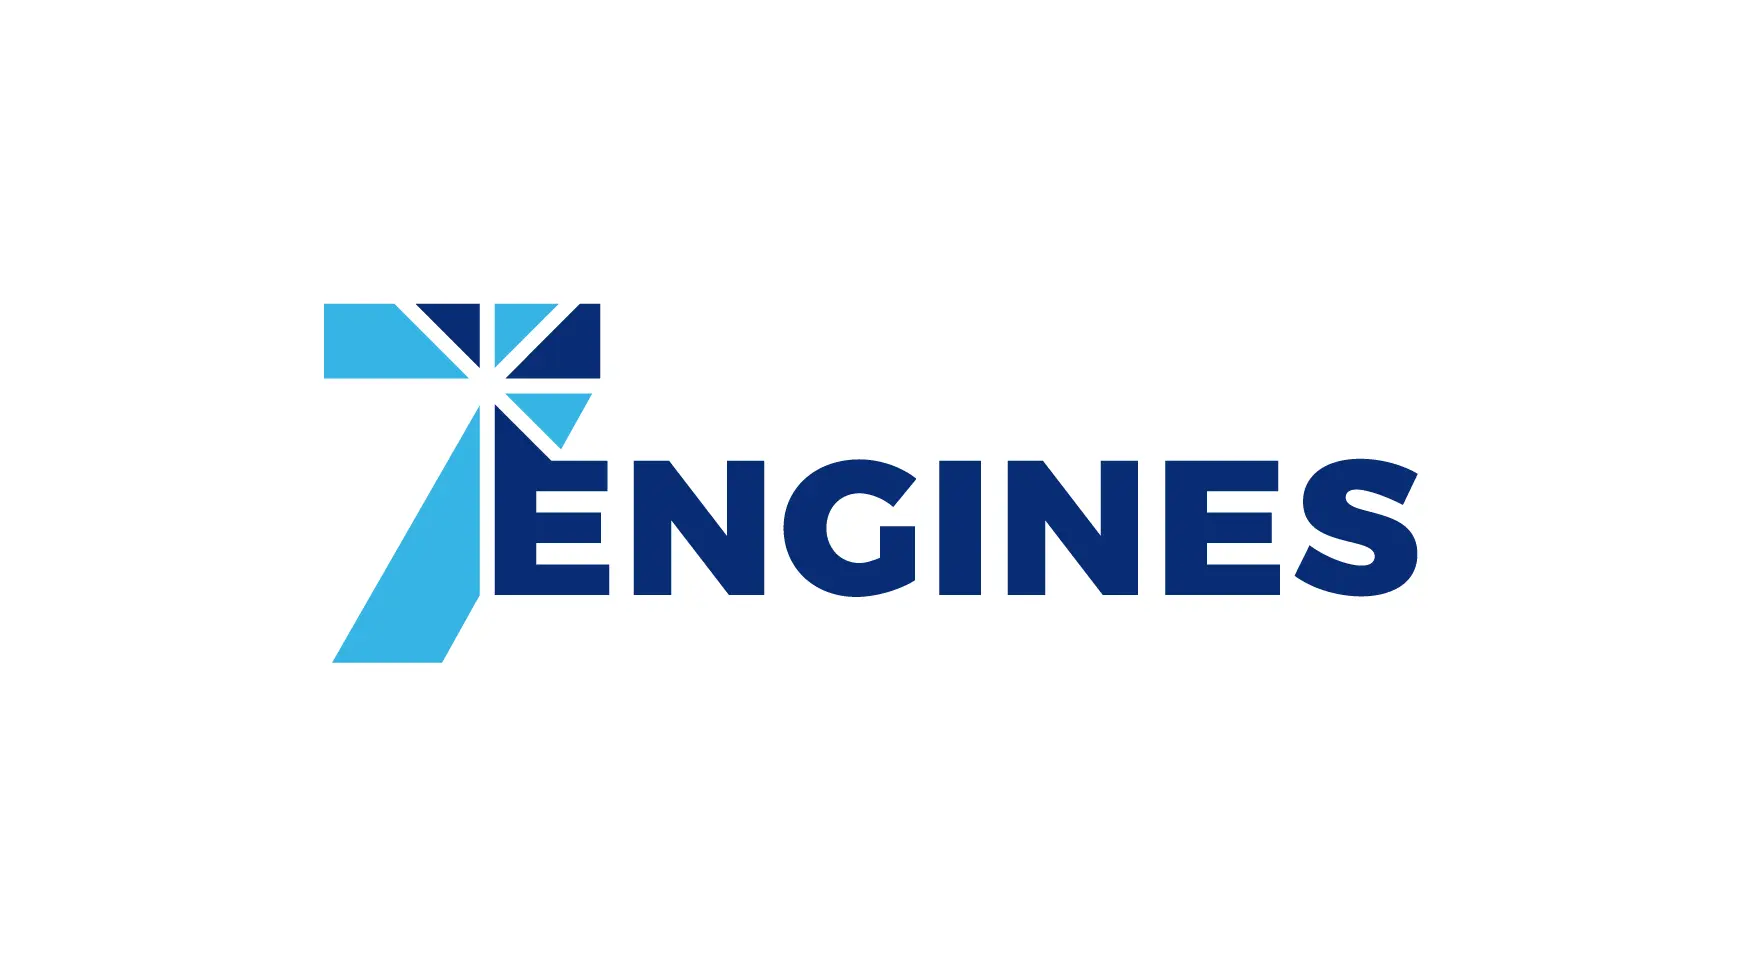 7Engines Logo